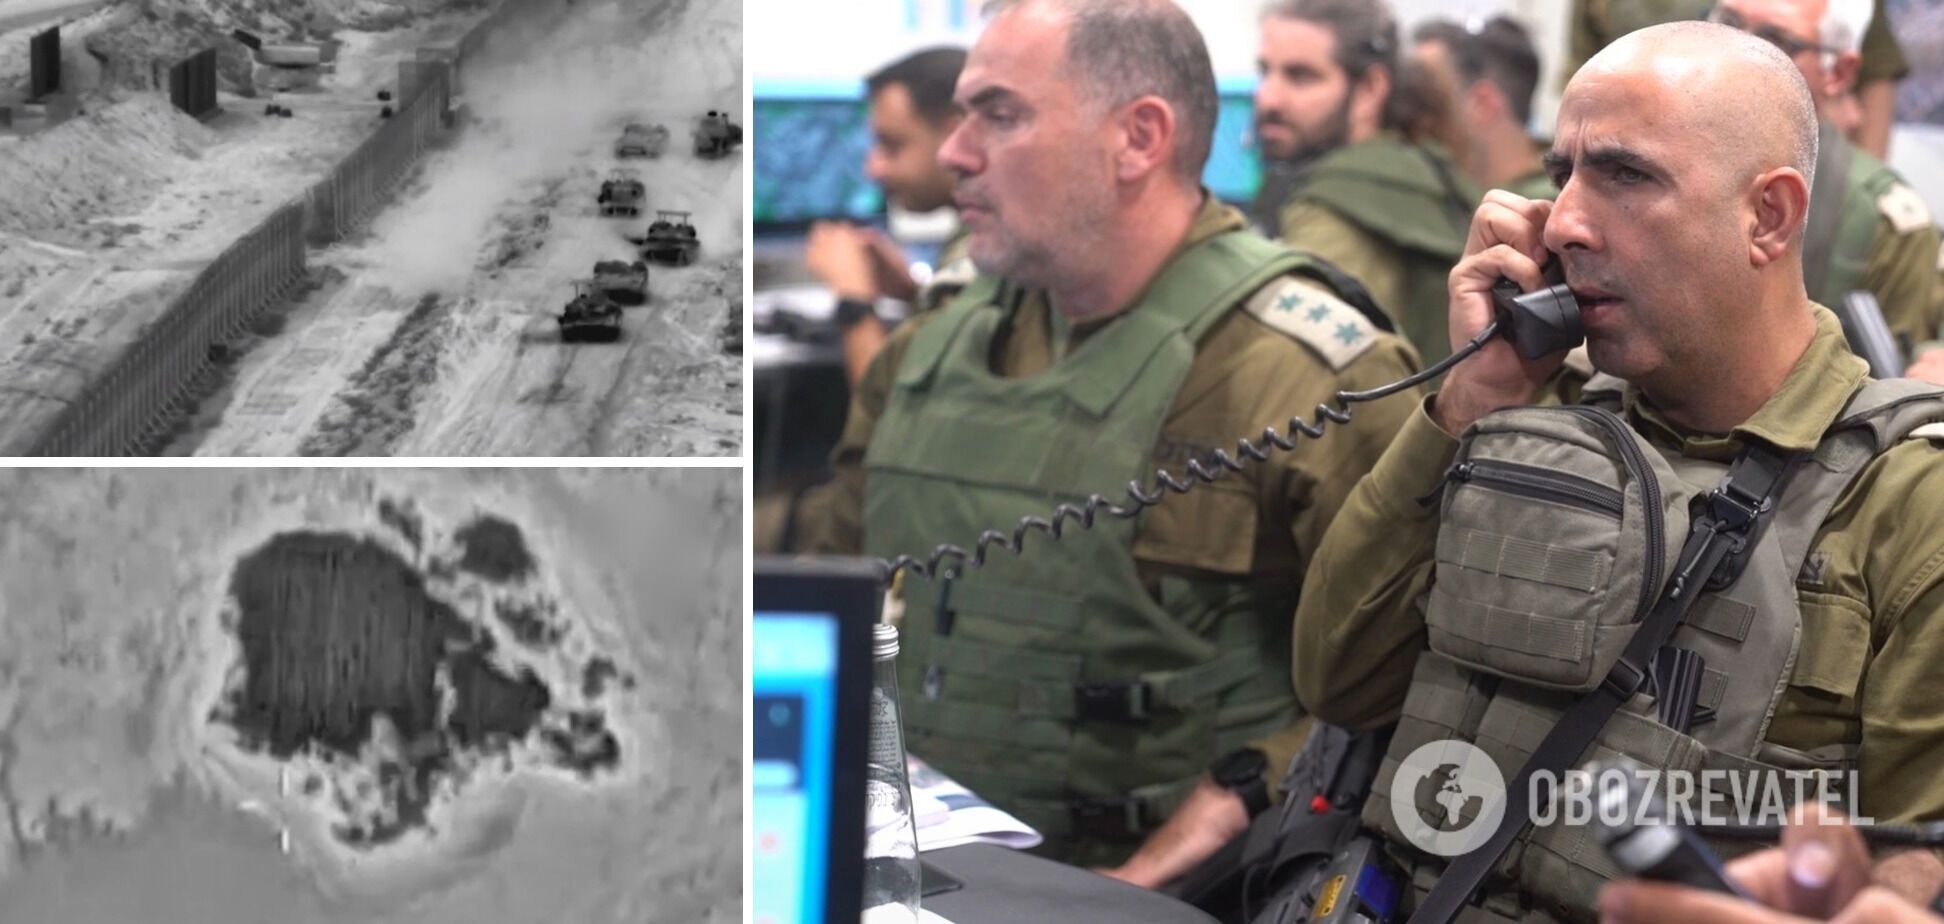 Israeli tanks and infantry enter Gaza at night: IDF reveals details of raid. Video